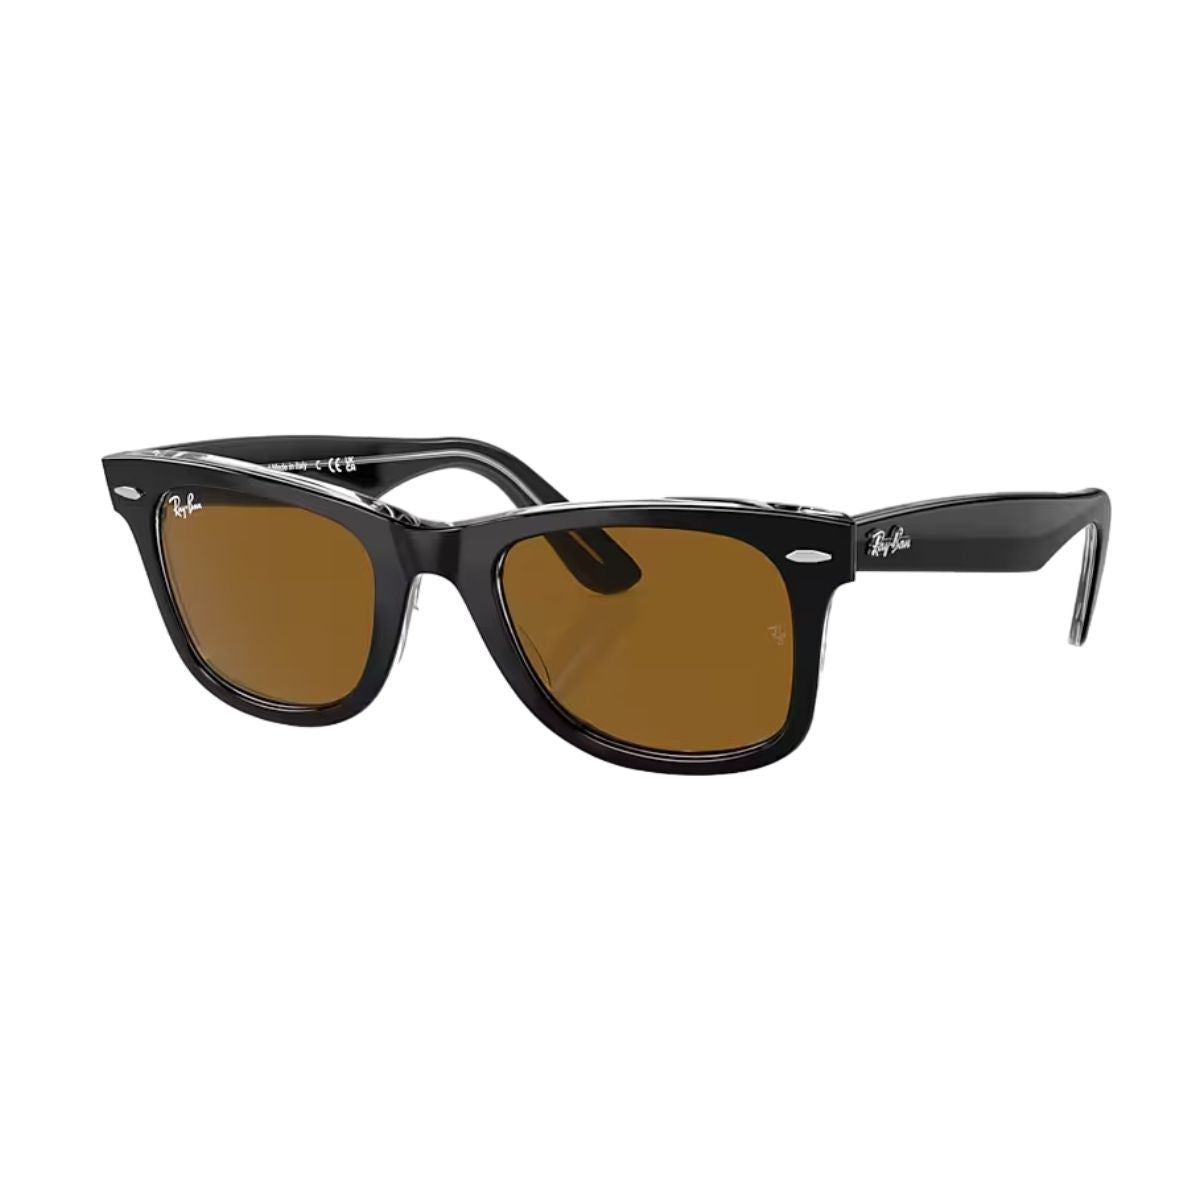 "Rayban 2140 1294/33 Wayfarer UV Polarized Sunglasses For Men's At Optorium"